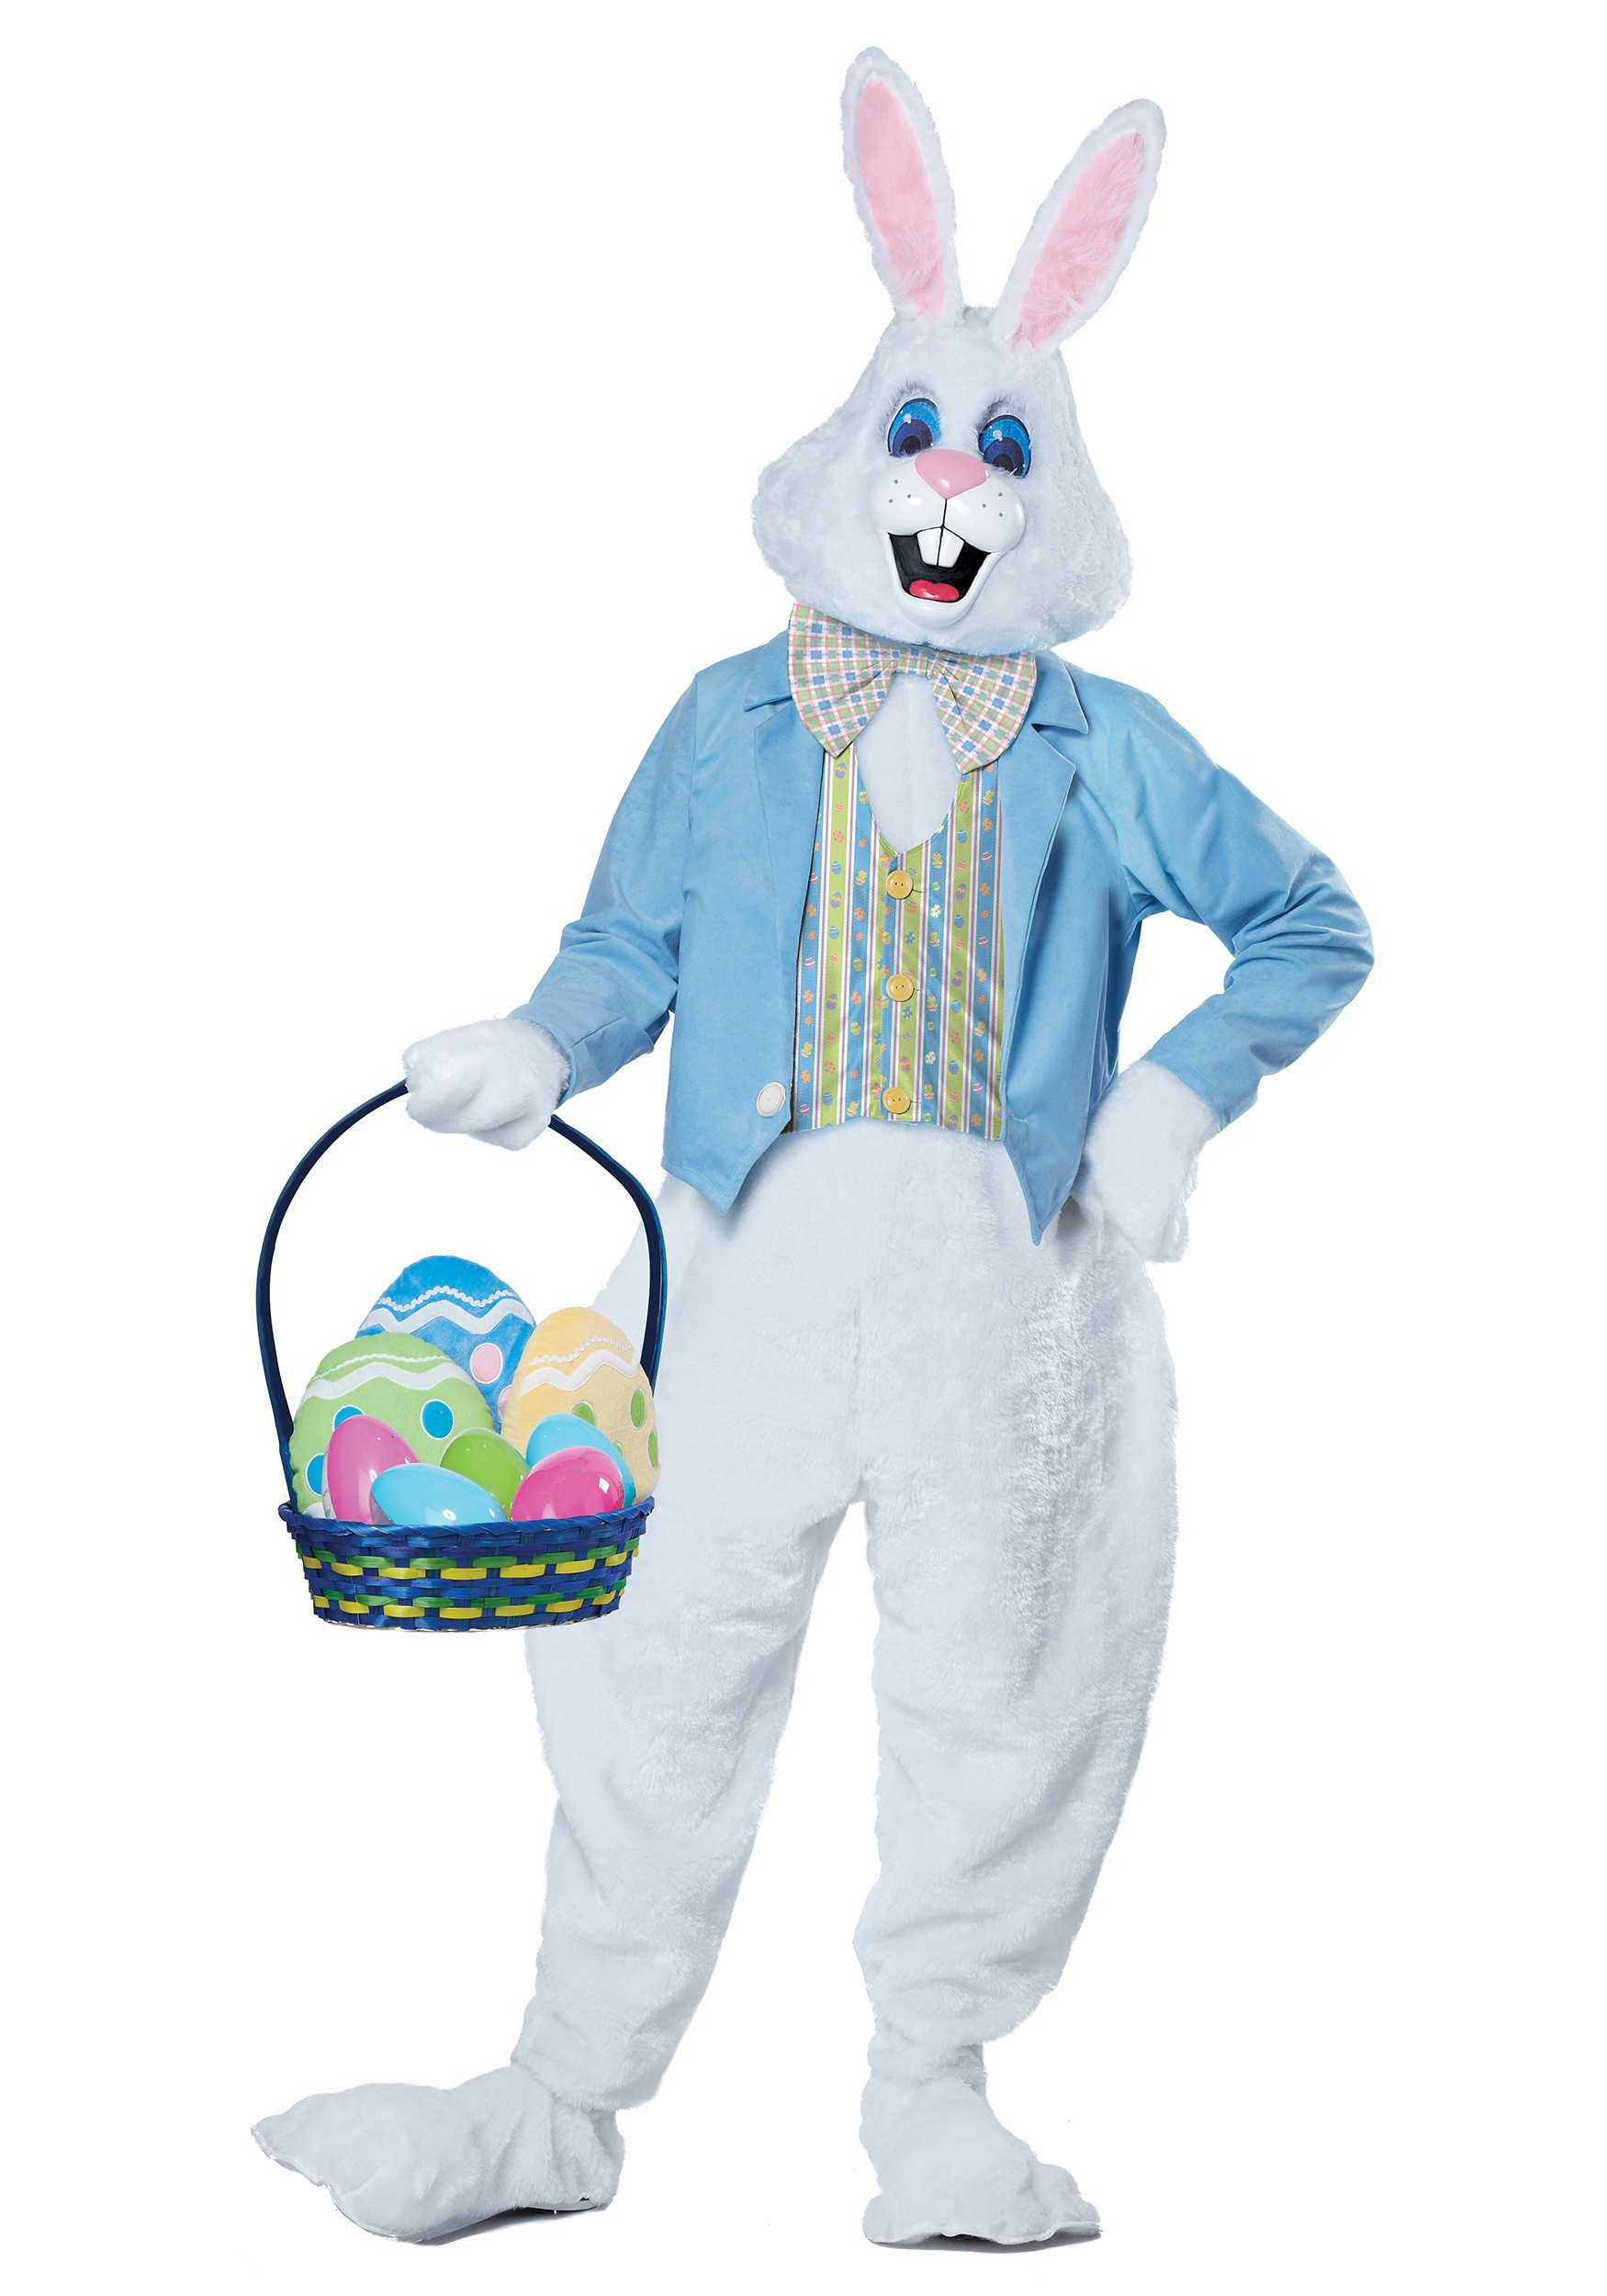 Easter bunny costume photo